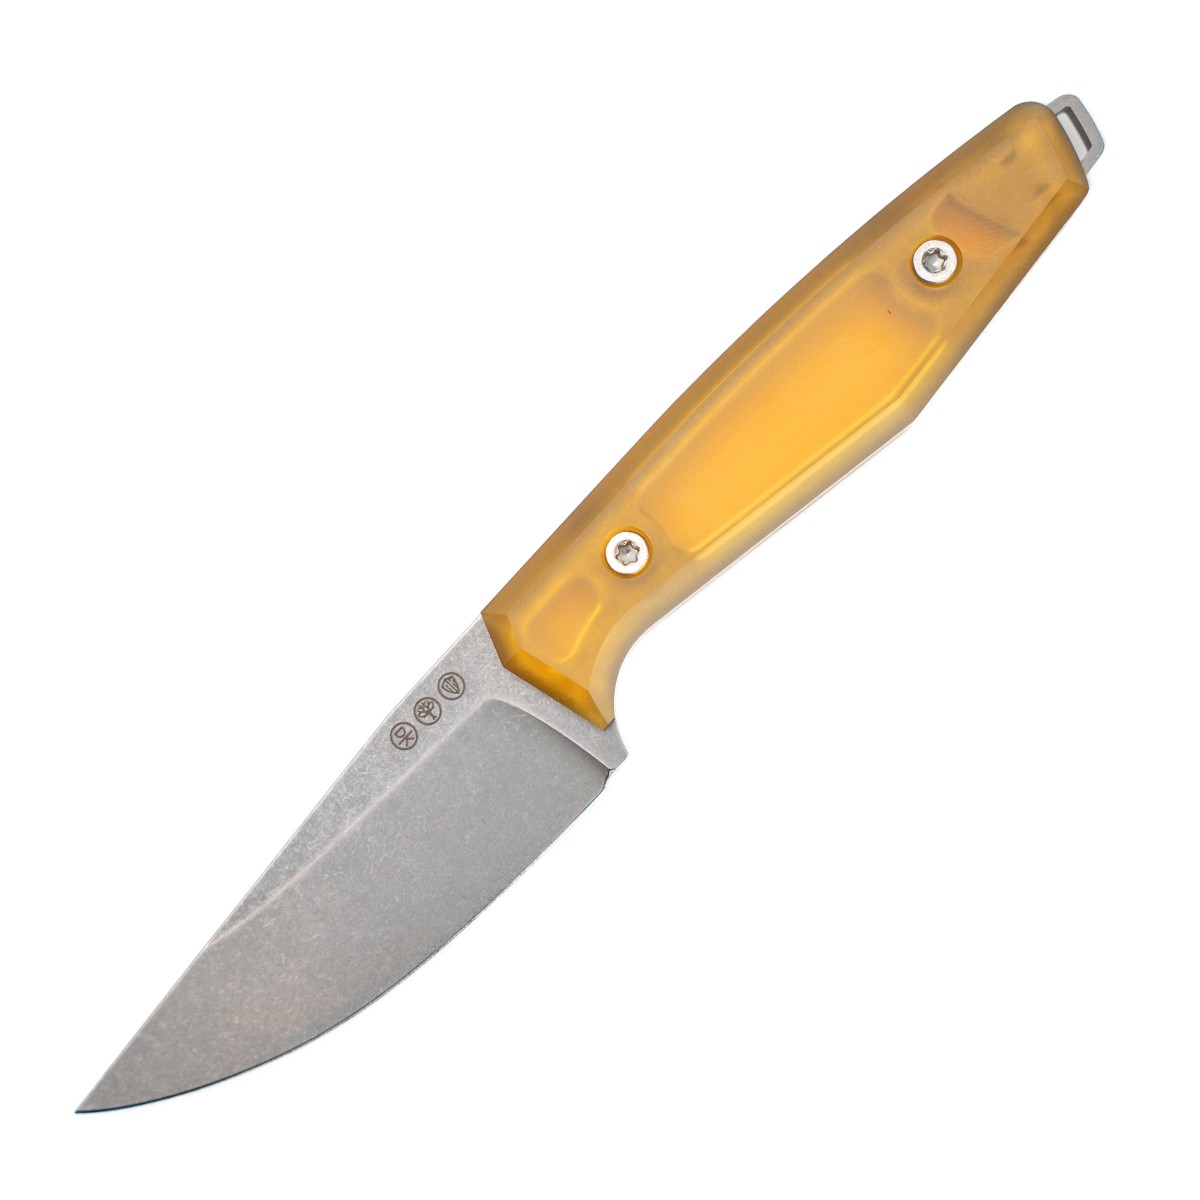 Groceries Apparel Knife Crop/ 3 colors